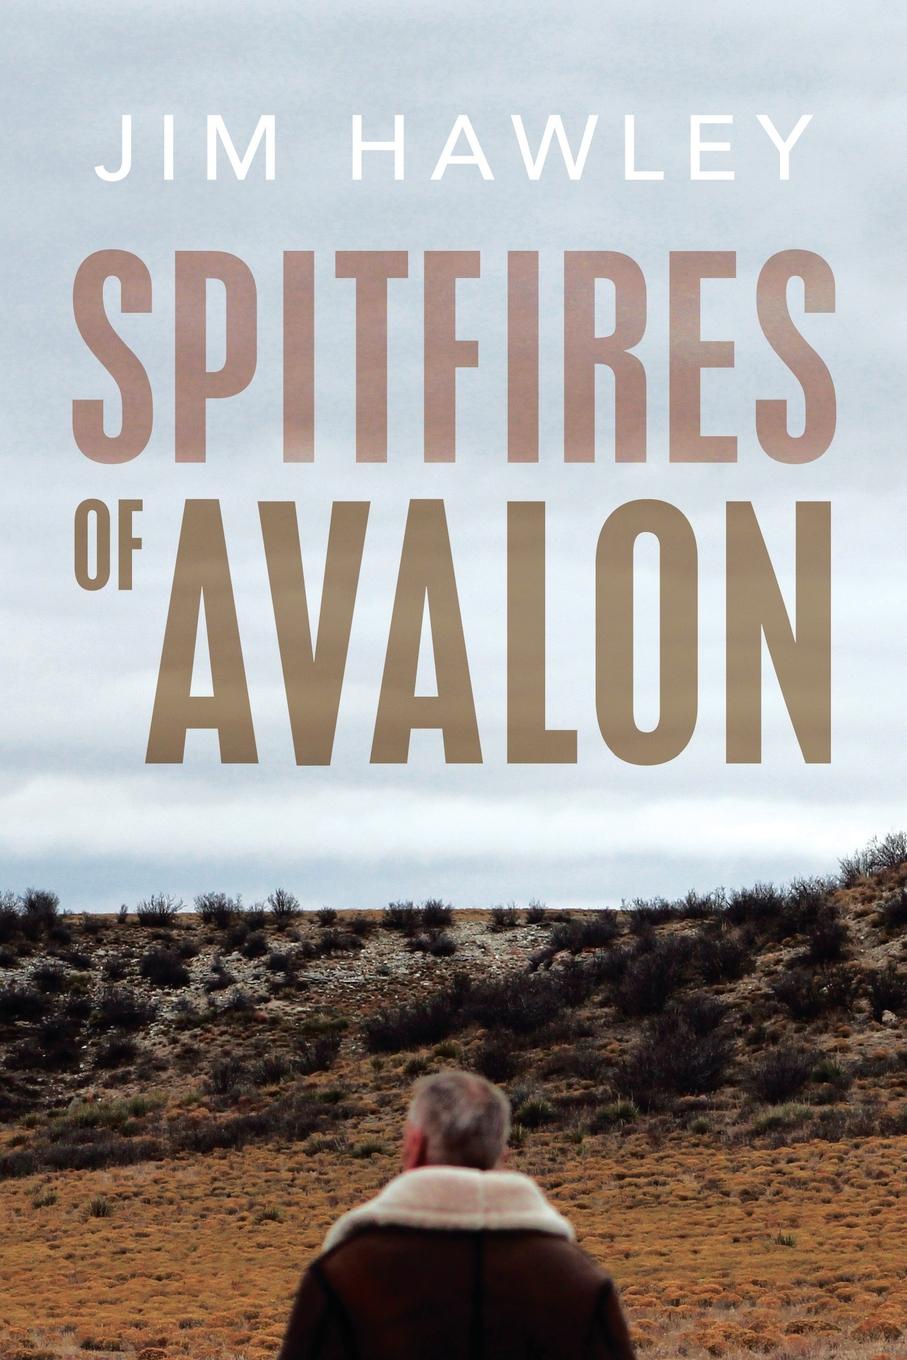 Jim Hawley Spitfires of Avalon